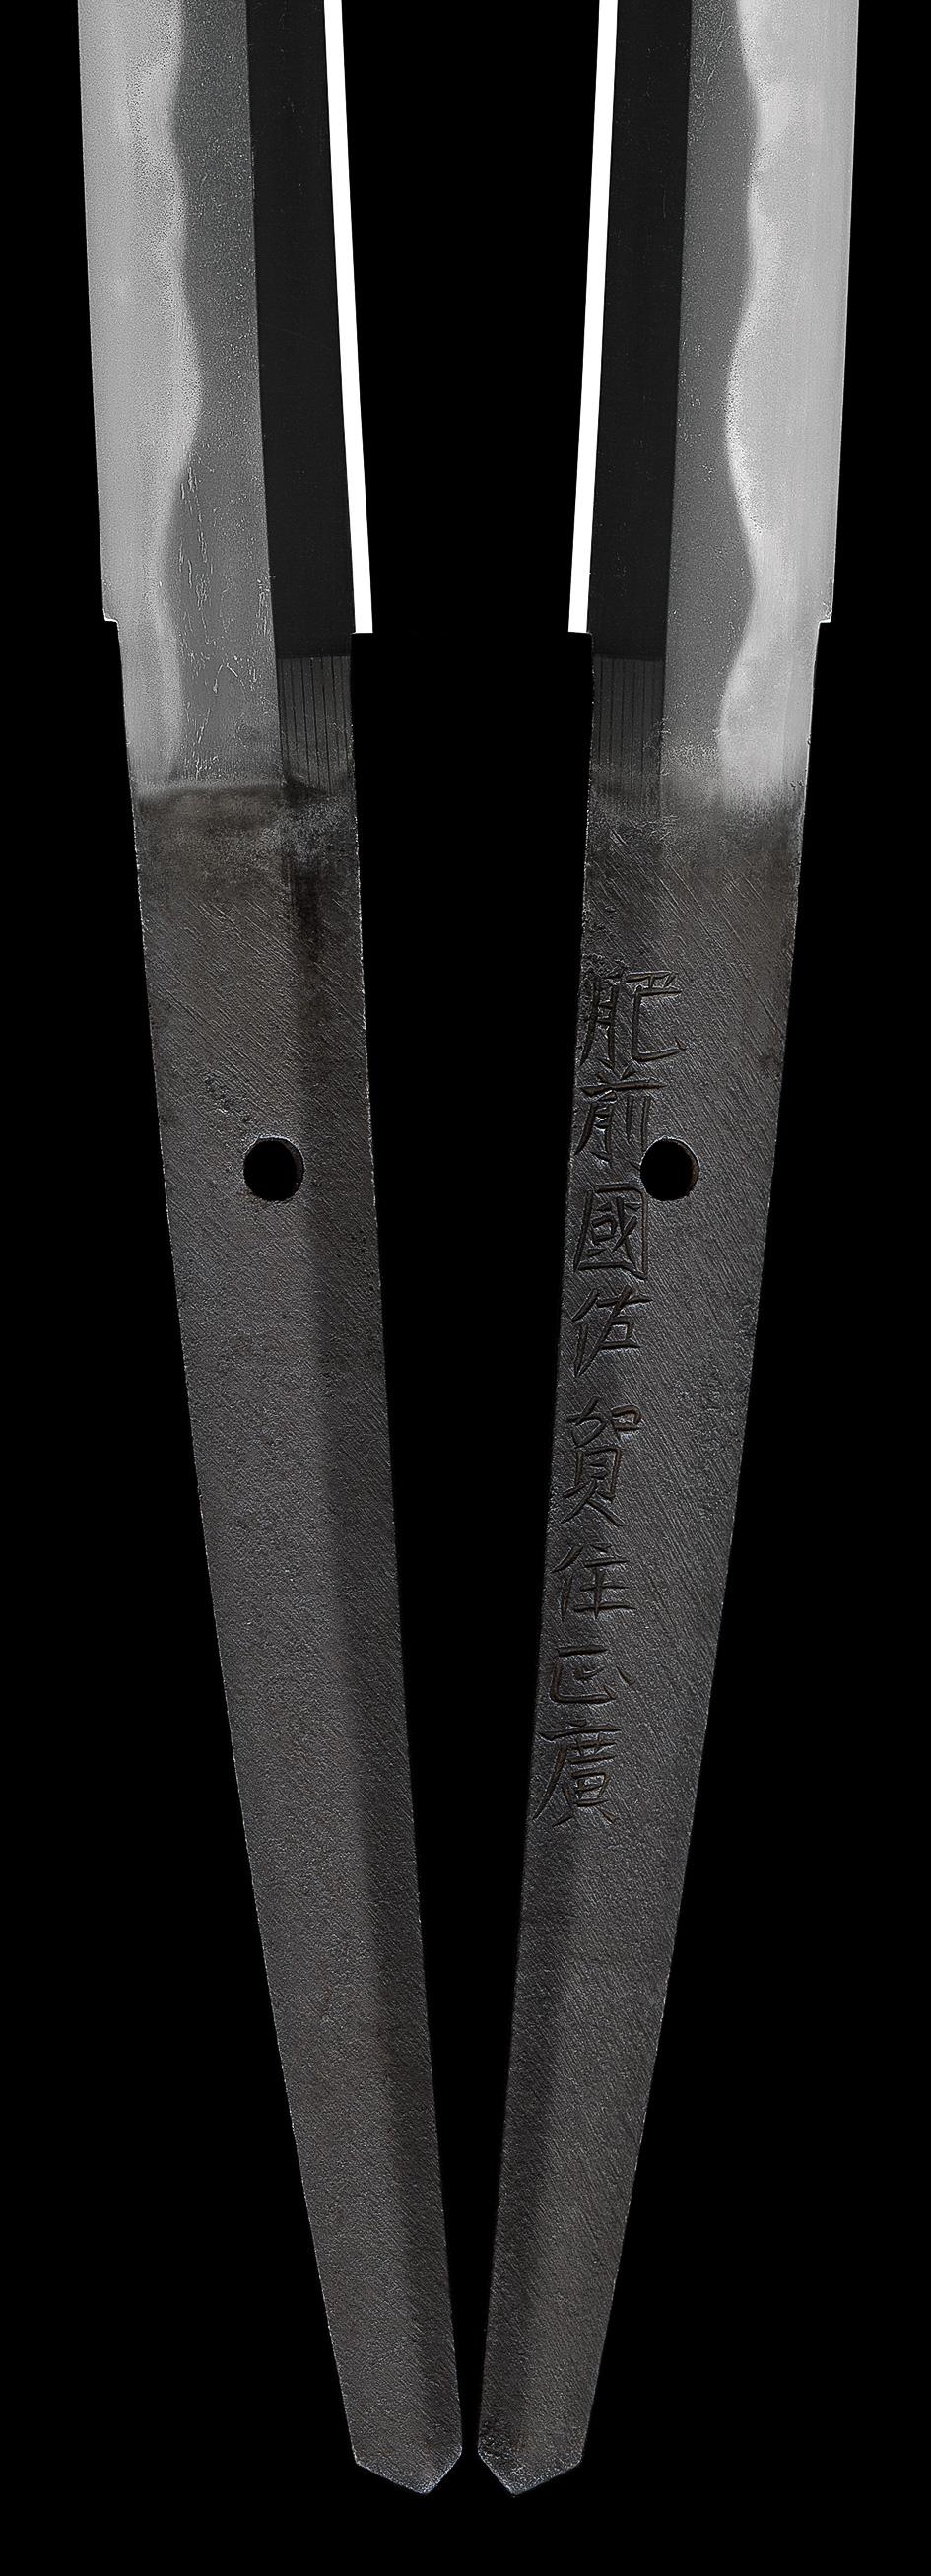 Hizen Katana
Signed “Hizen kuni Saga Ju Masahiro”
????????
Edo period, circa 1640
NBTHK Juyo Token 

MISURES
Nagasa [lenght]: 70.2 cm? Motohaba: 2.8 cm, sakihaba: 2 cm
Kasane [thickness]: 5.8 mm ?Sori [curvature]: 1.82 cm

Sugata